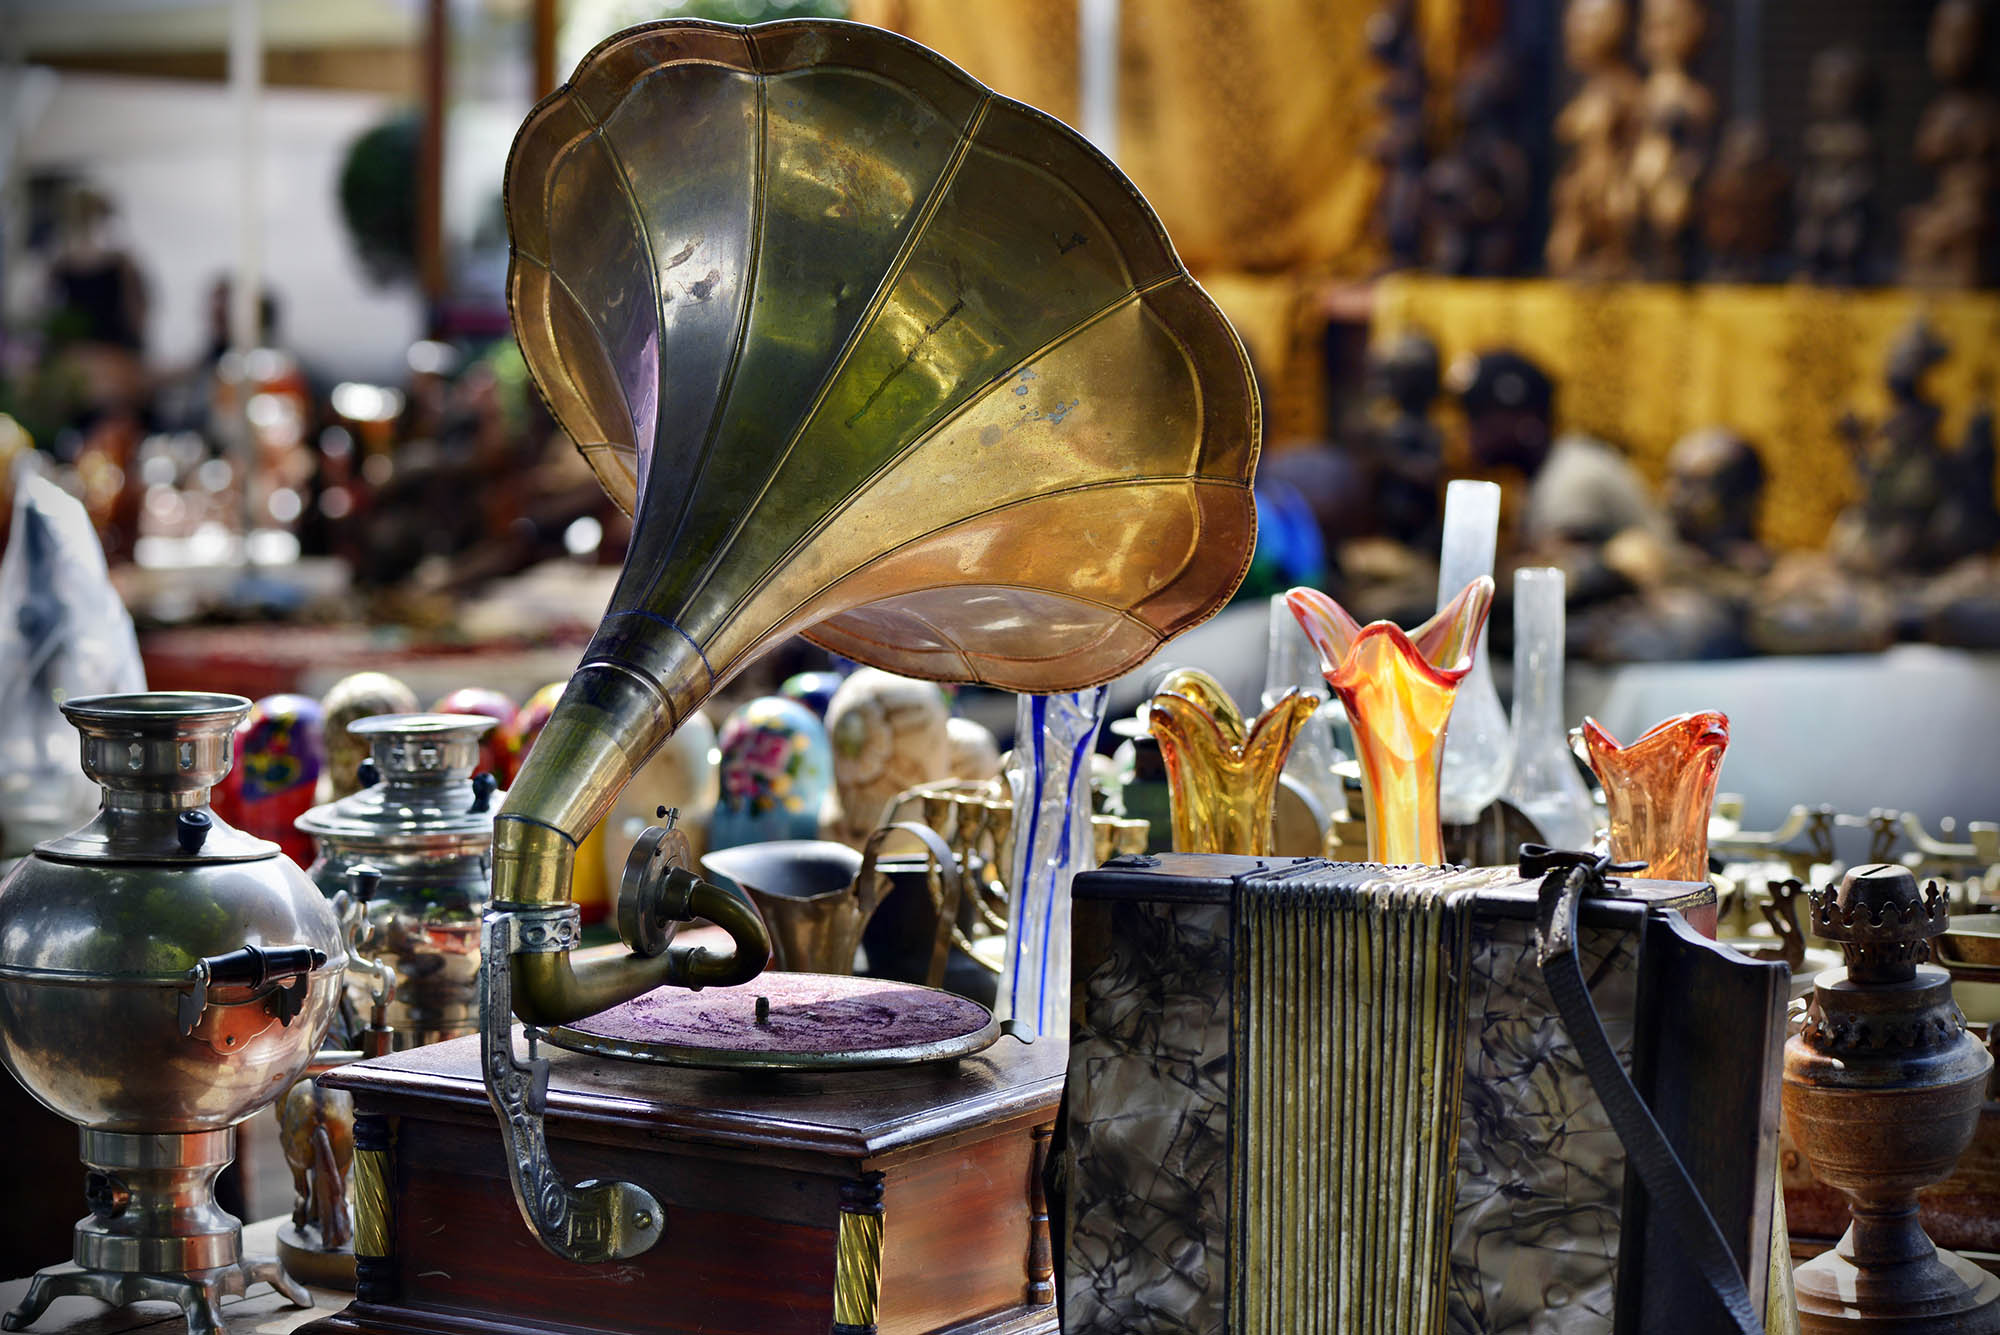 Photo: A stock image of a flea market with a huge megaphone device amongst the trinkets.